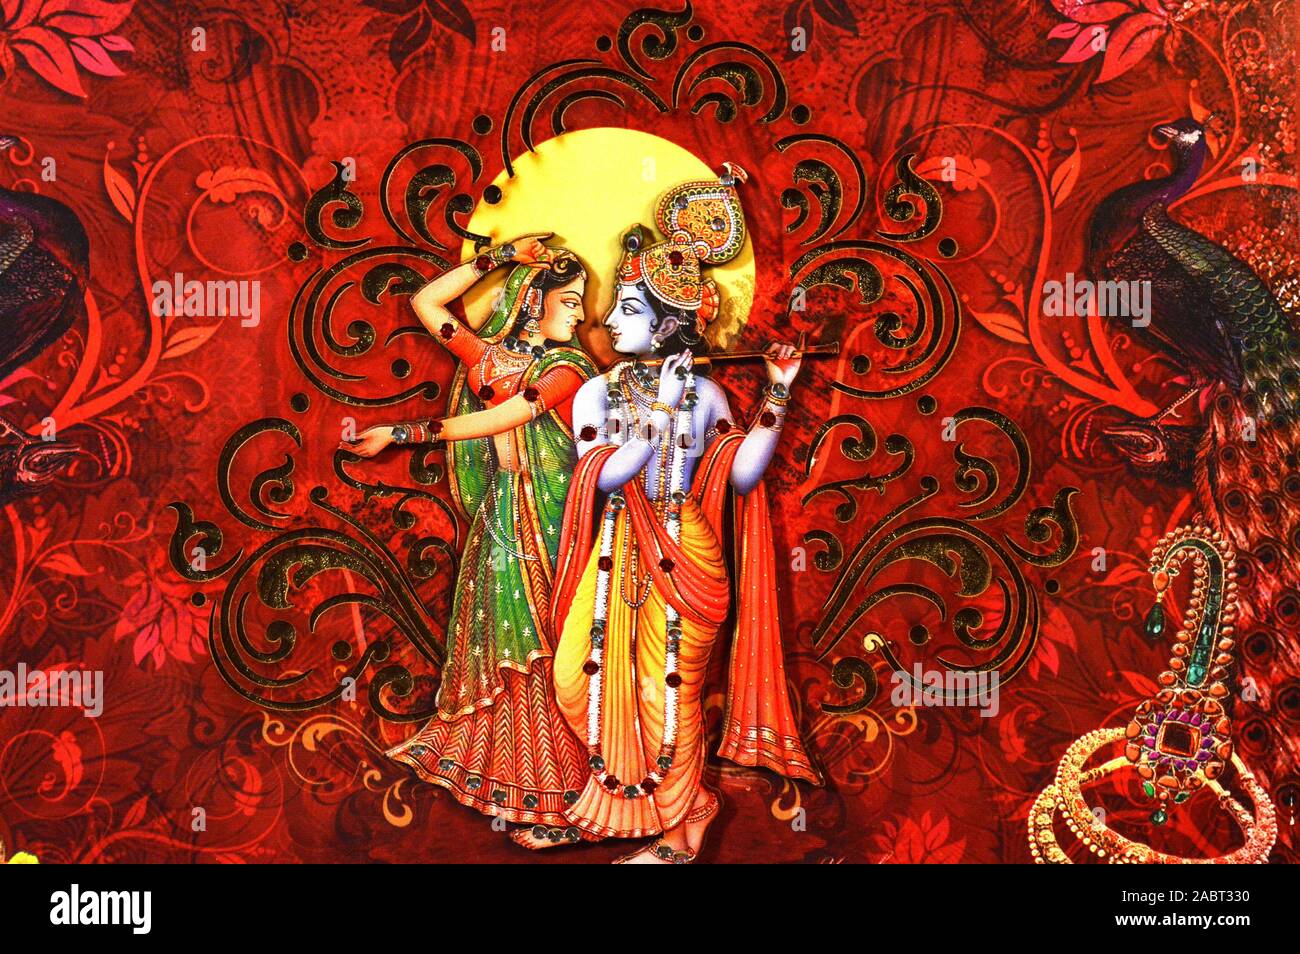 A art work of lord krishna with his lover radha on a paper radhe krishna Stock Photo